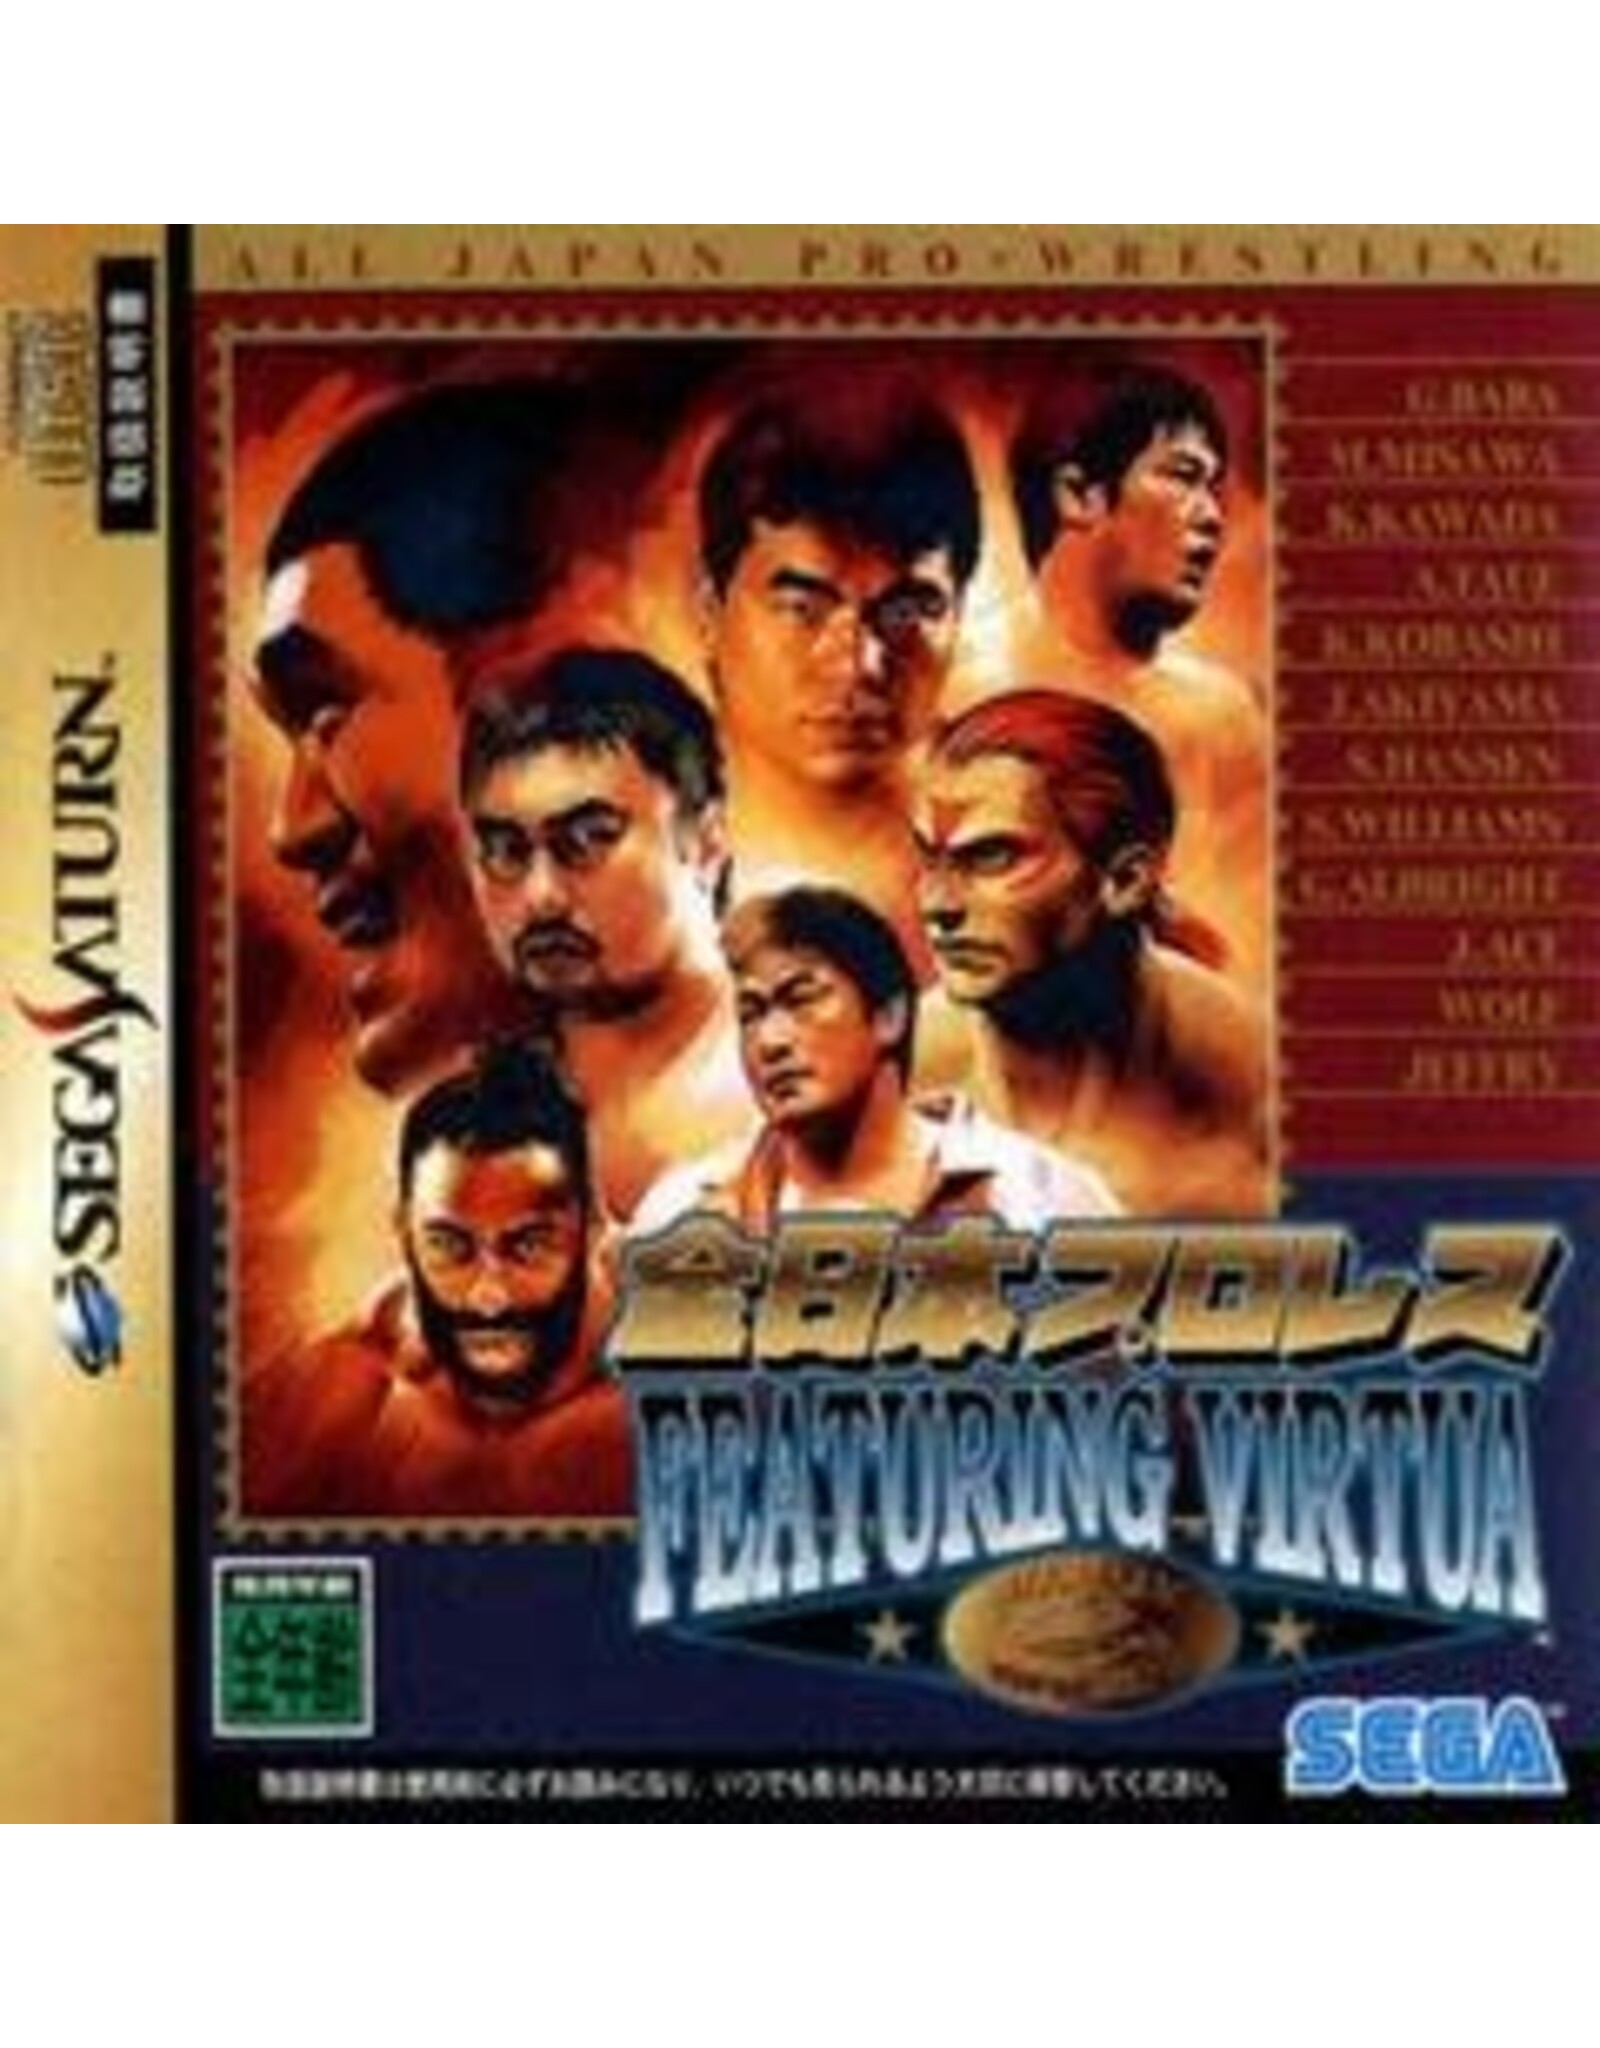 Sega Saturn All Japan Pro Wrestling Featuring Virtua - JP Import (Used)